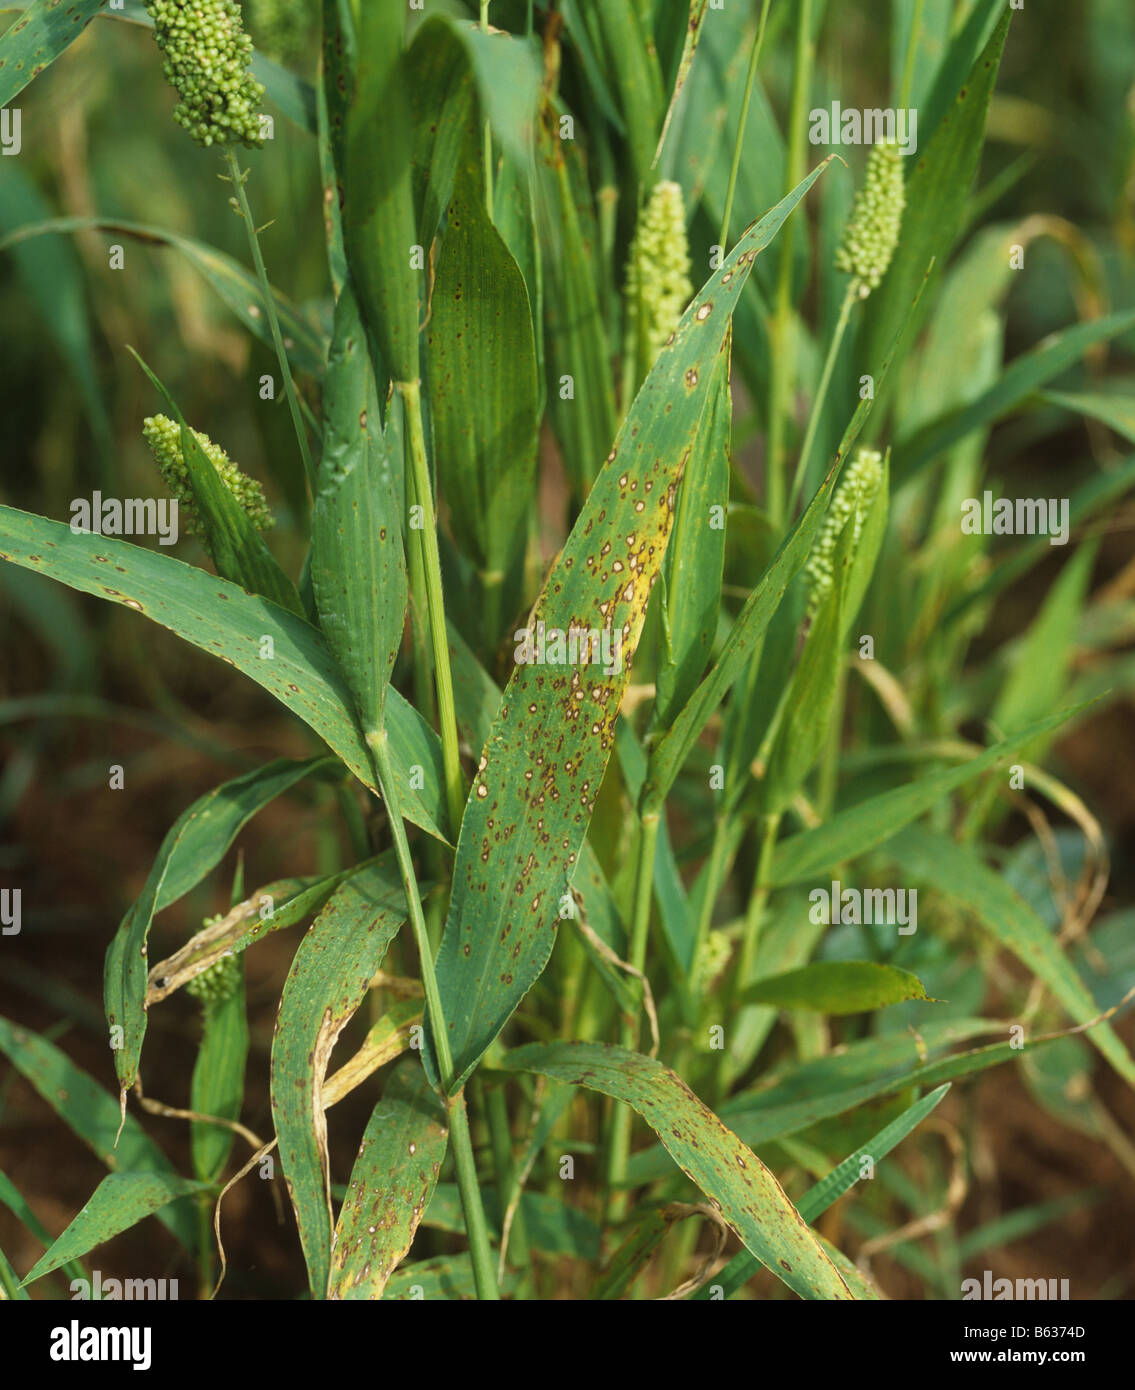 Leaf spot Pyricularia grisea symptoms on foxtail millet leaves Stock Photo